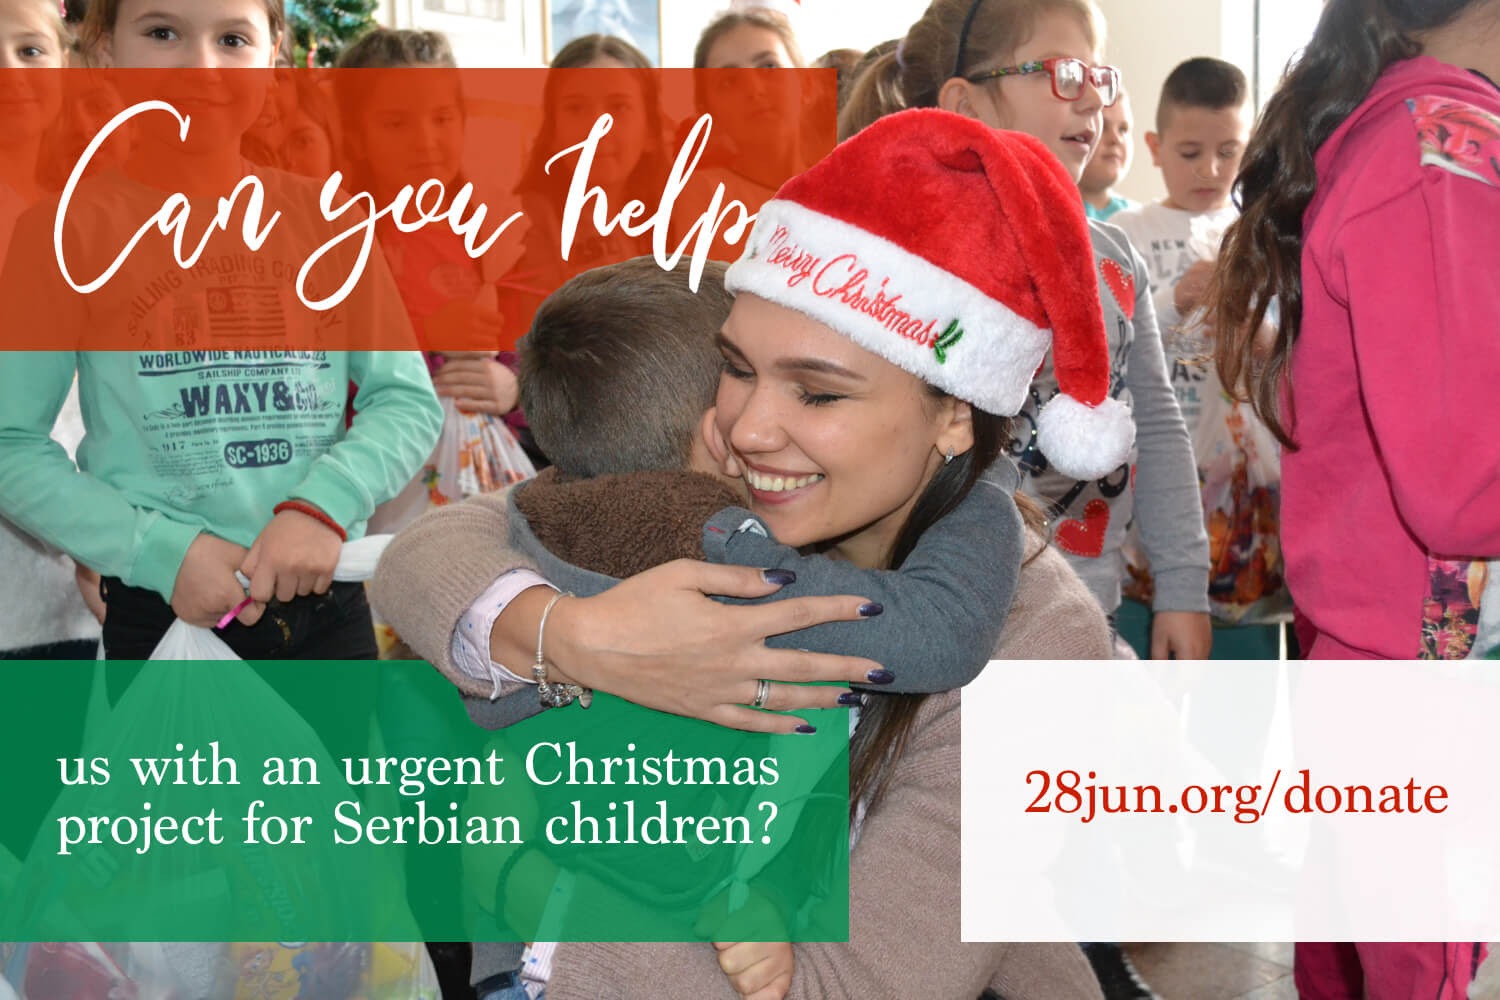 28. Jun NGO Delivers Christmas Presents to Hundreds of Serbian Children in Montenegro and Krajina